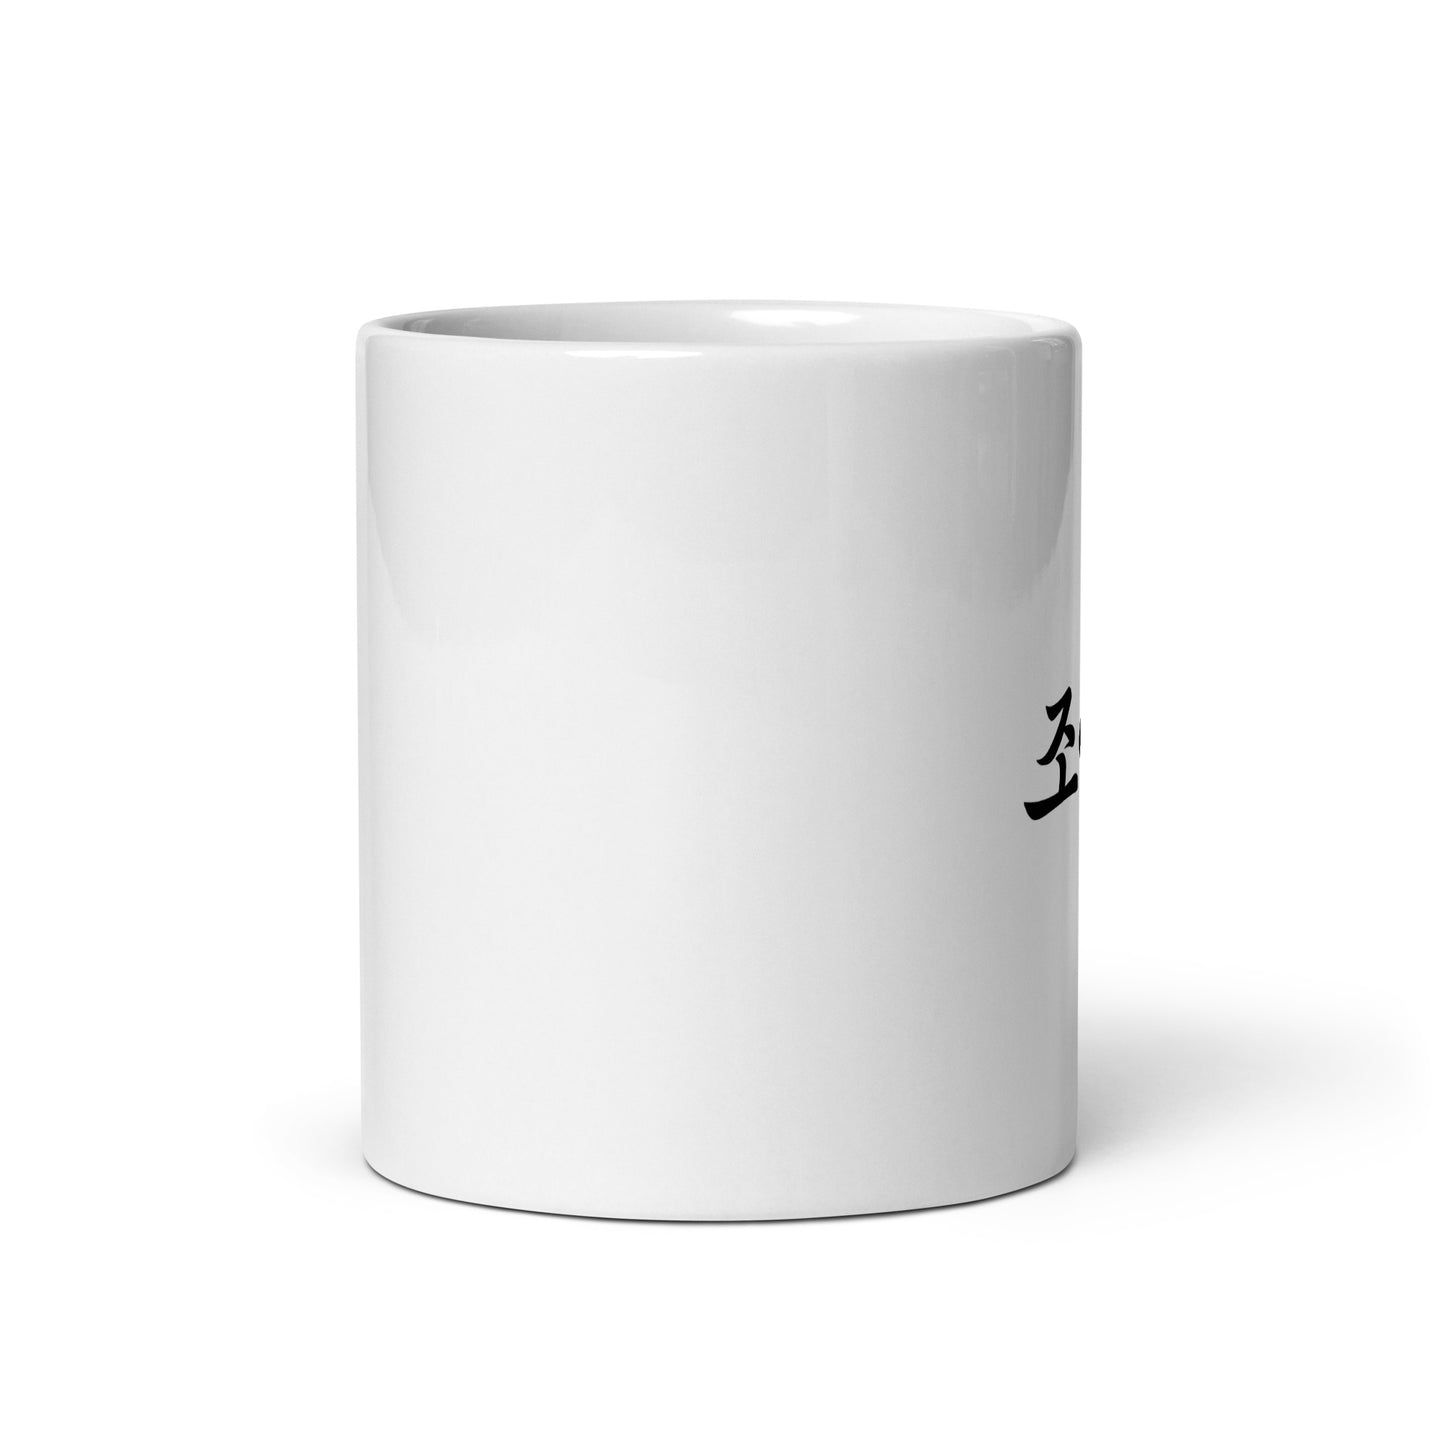 Joyce in Hangul Custom Name Gift Ceramic Mug